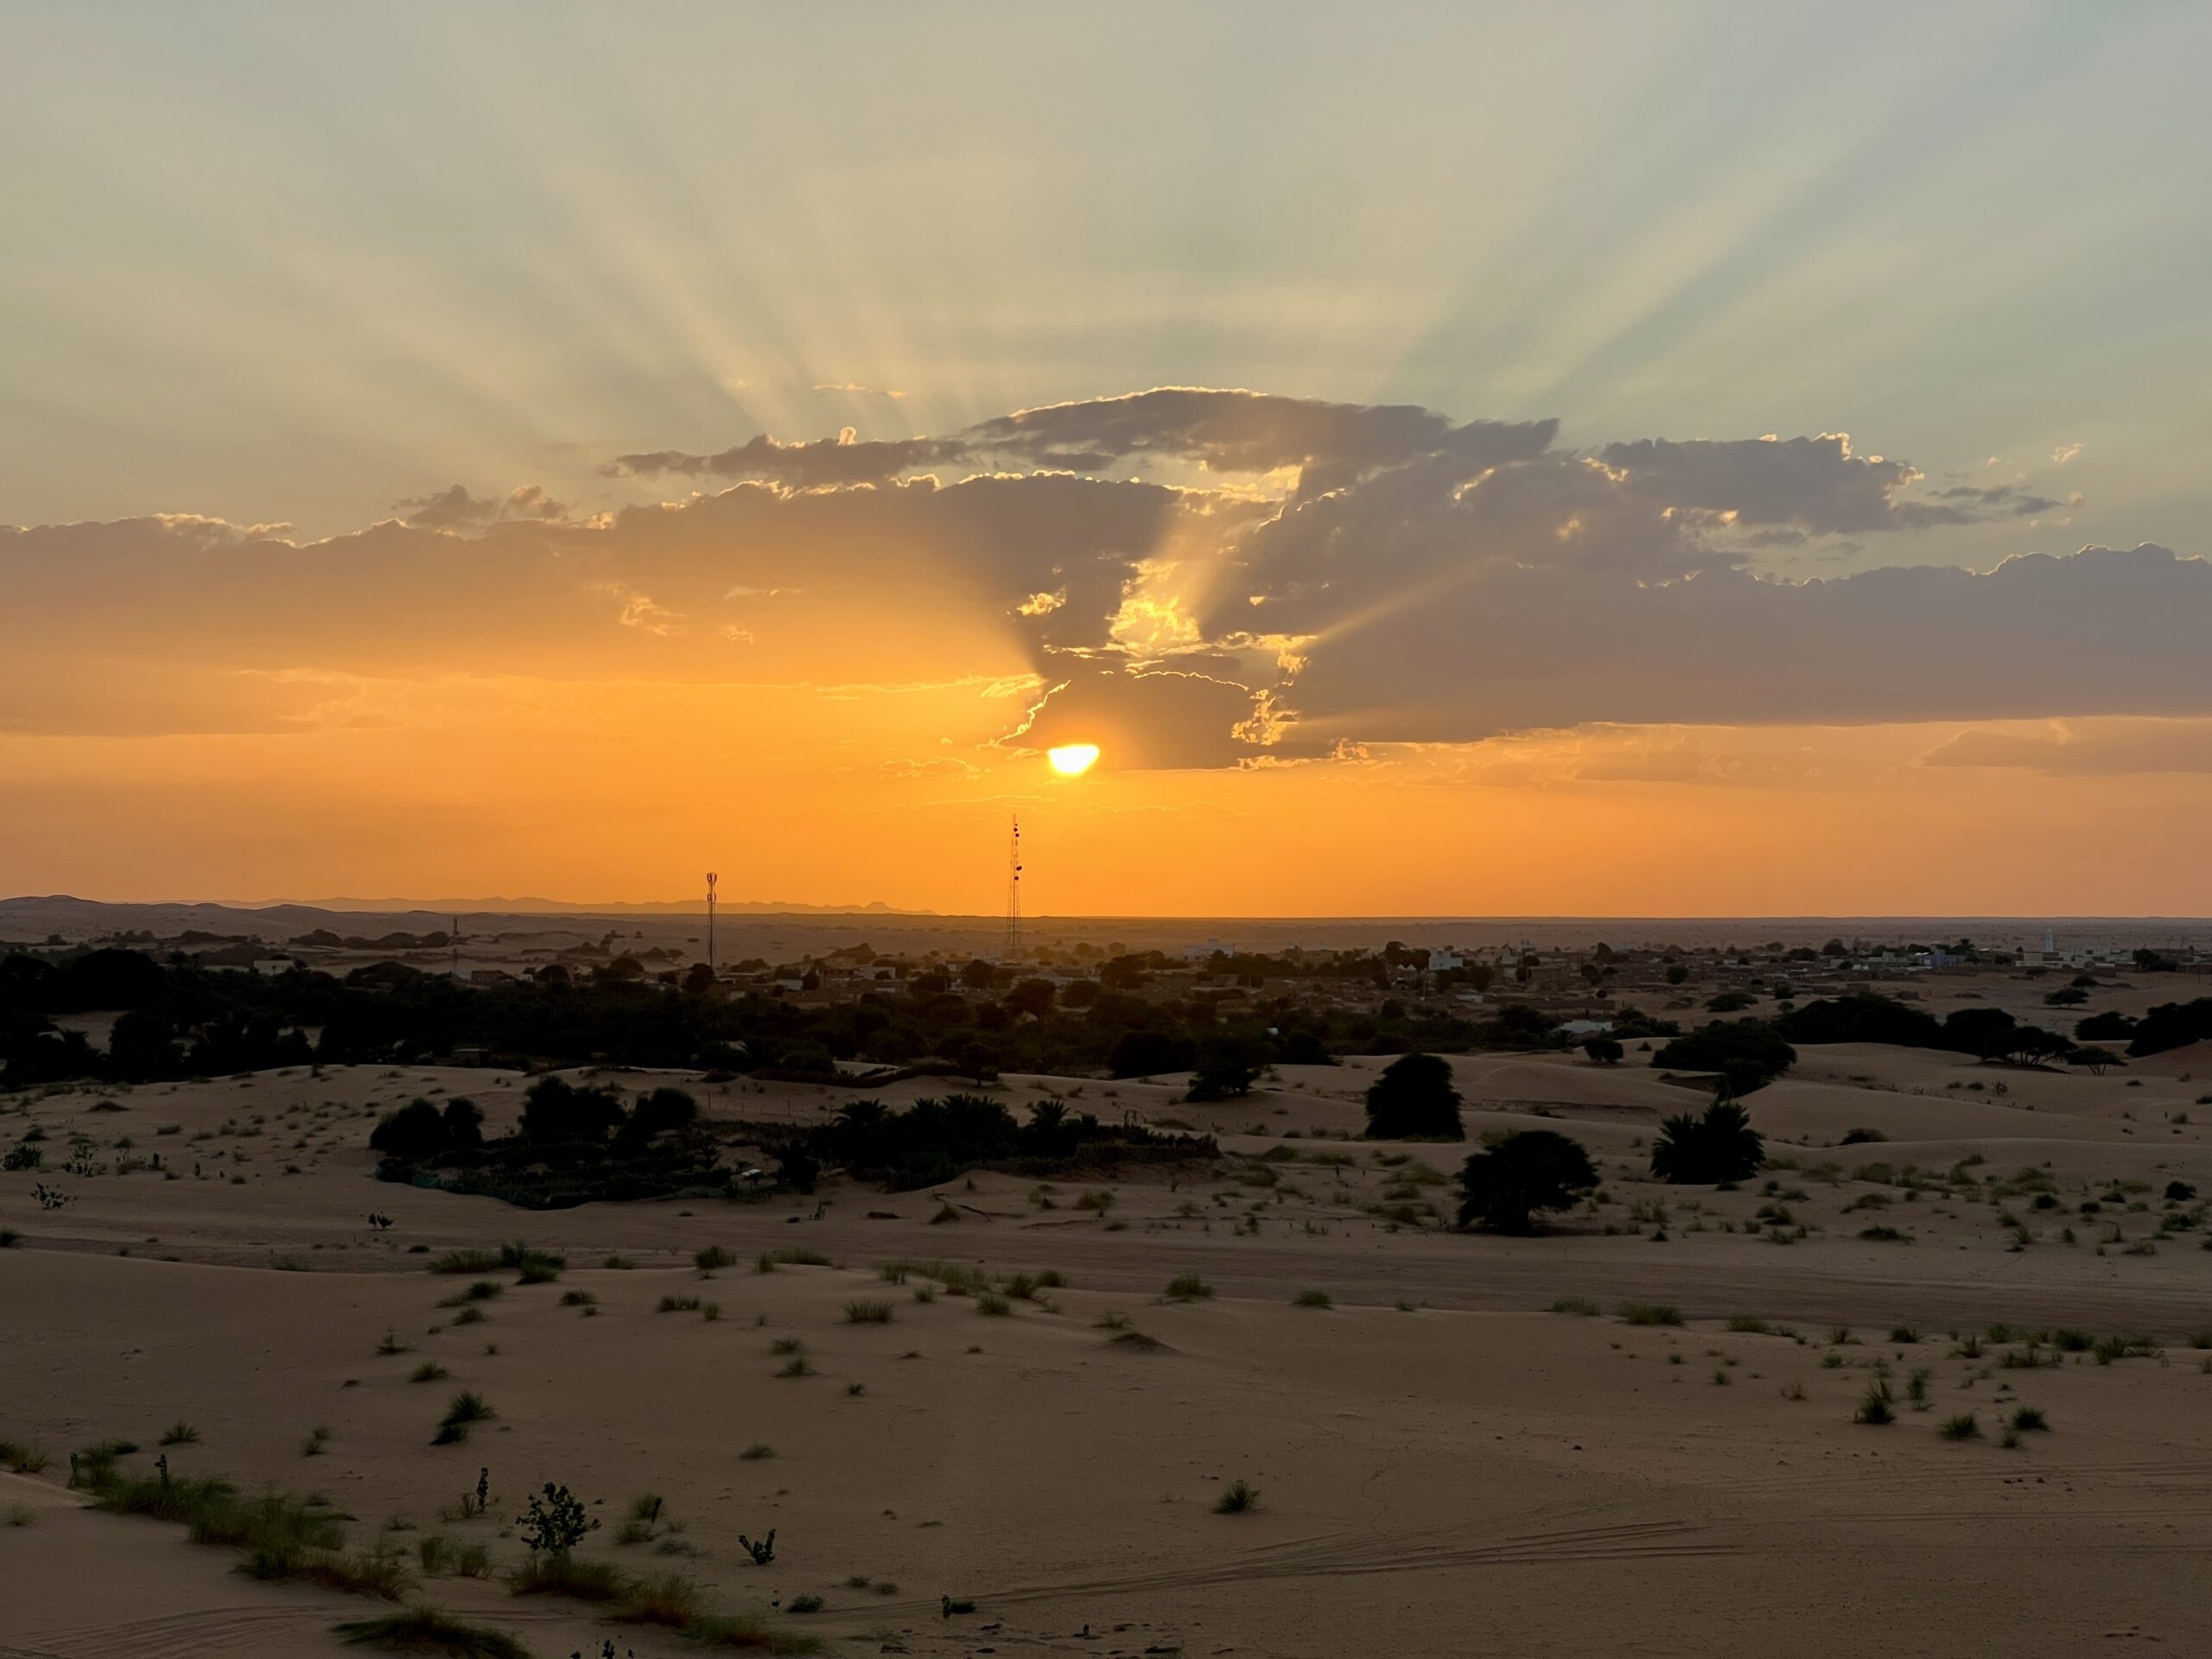 Sunset in Mauritania